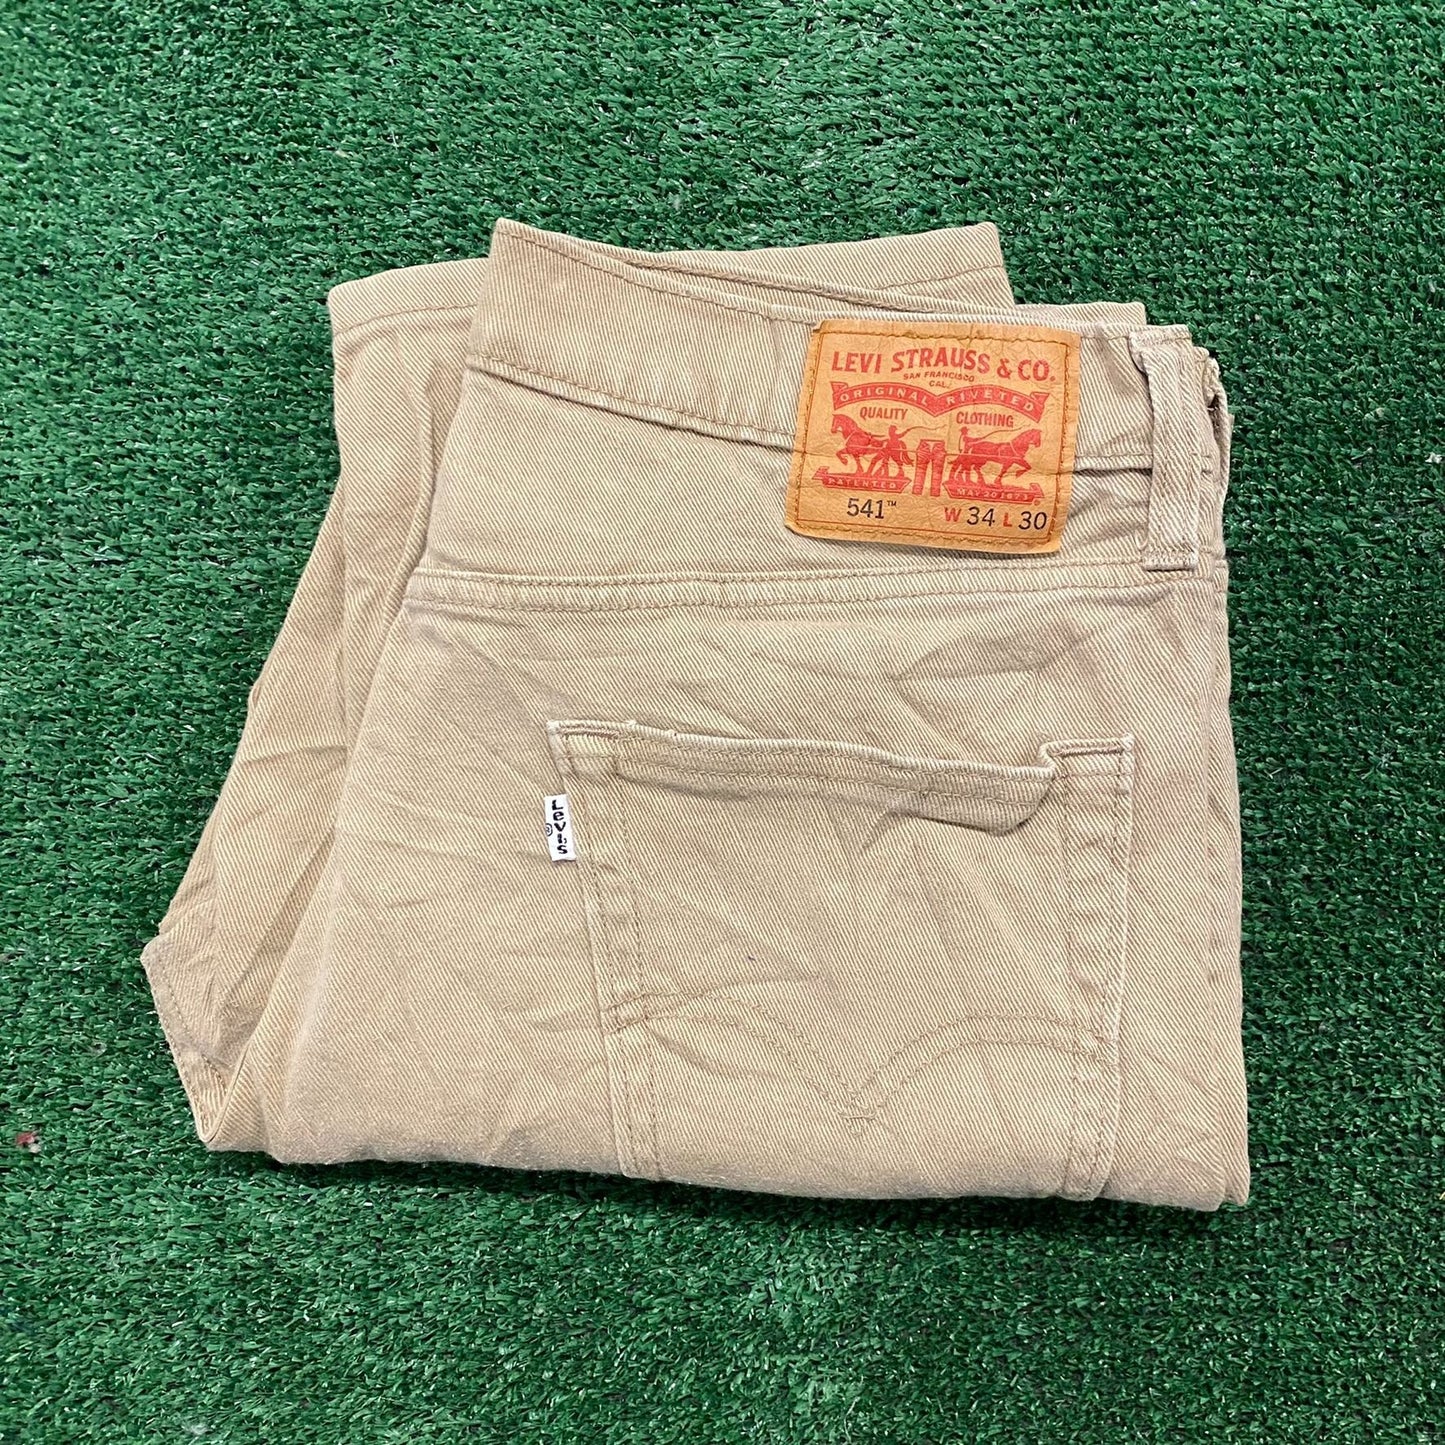 Levi's 541 Athletic Taper Fit Vintage Chinos Work Pants